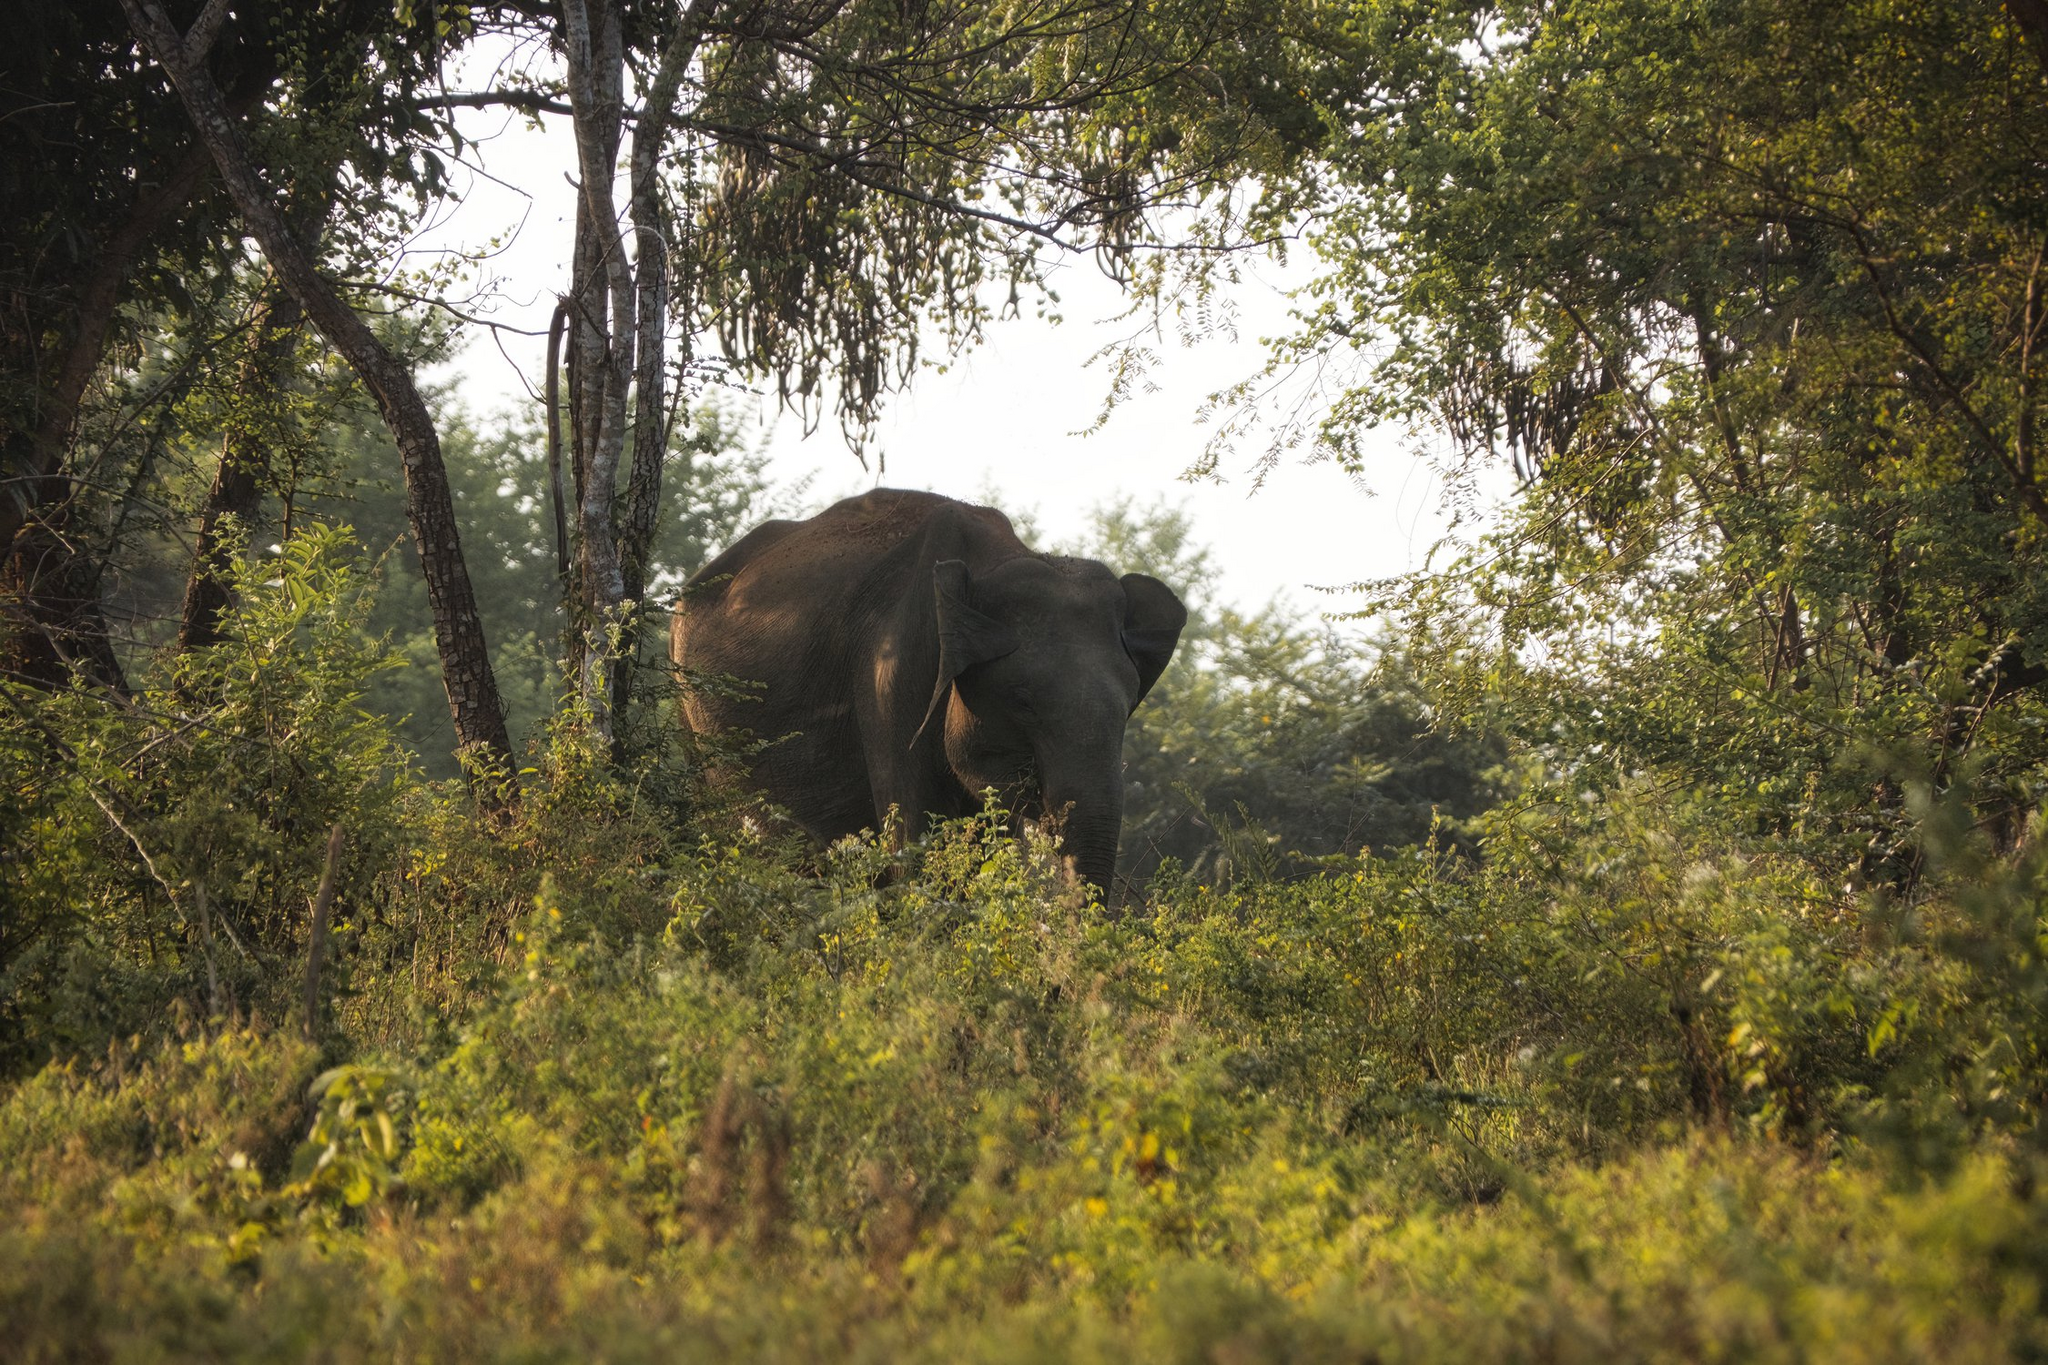 Ceylon elephant - Elephants, Ceylon, Sri Lanka, Island, Southern Asia, Indian Ocean, wildlife, Wild animals, beauty of nature, The photo, National park, Longpost